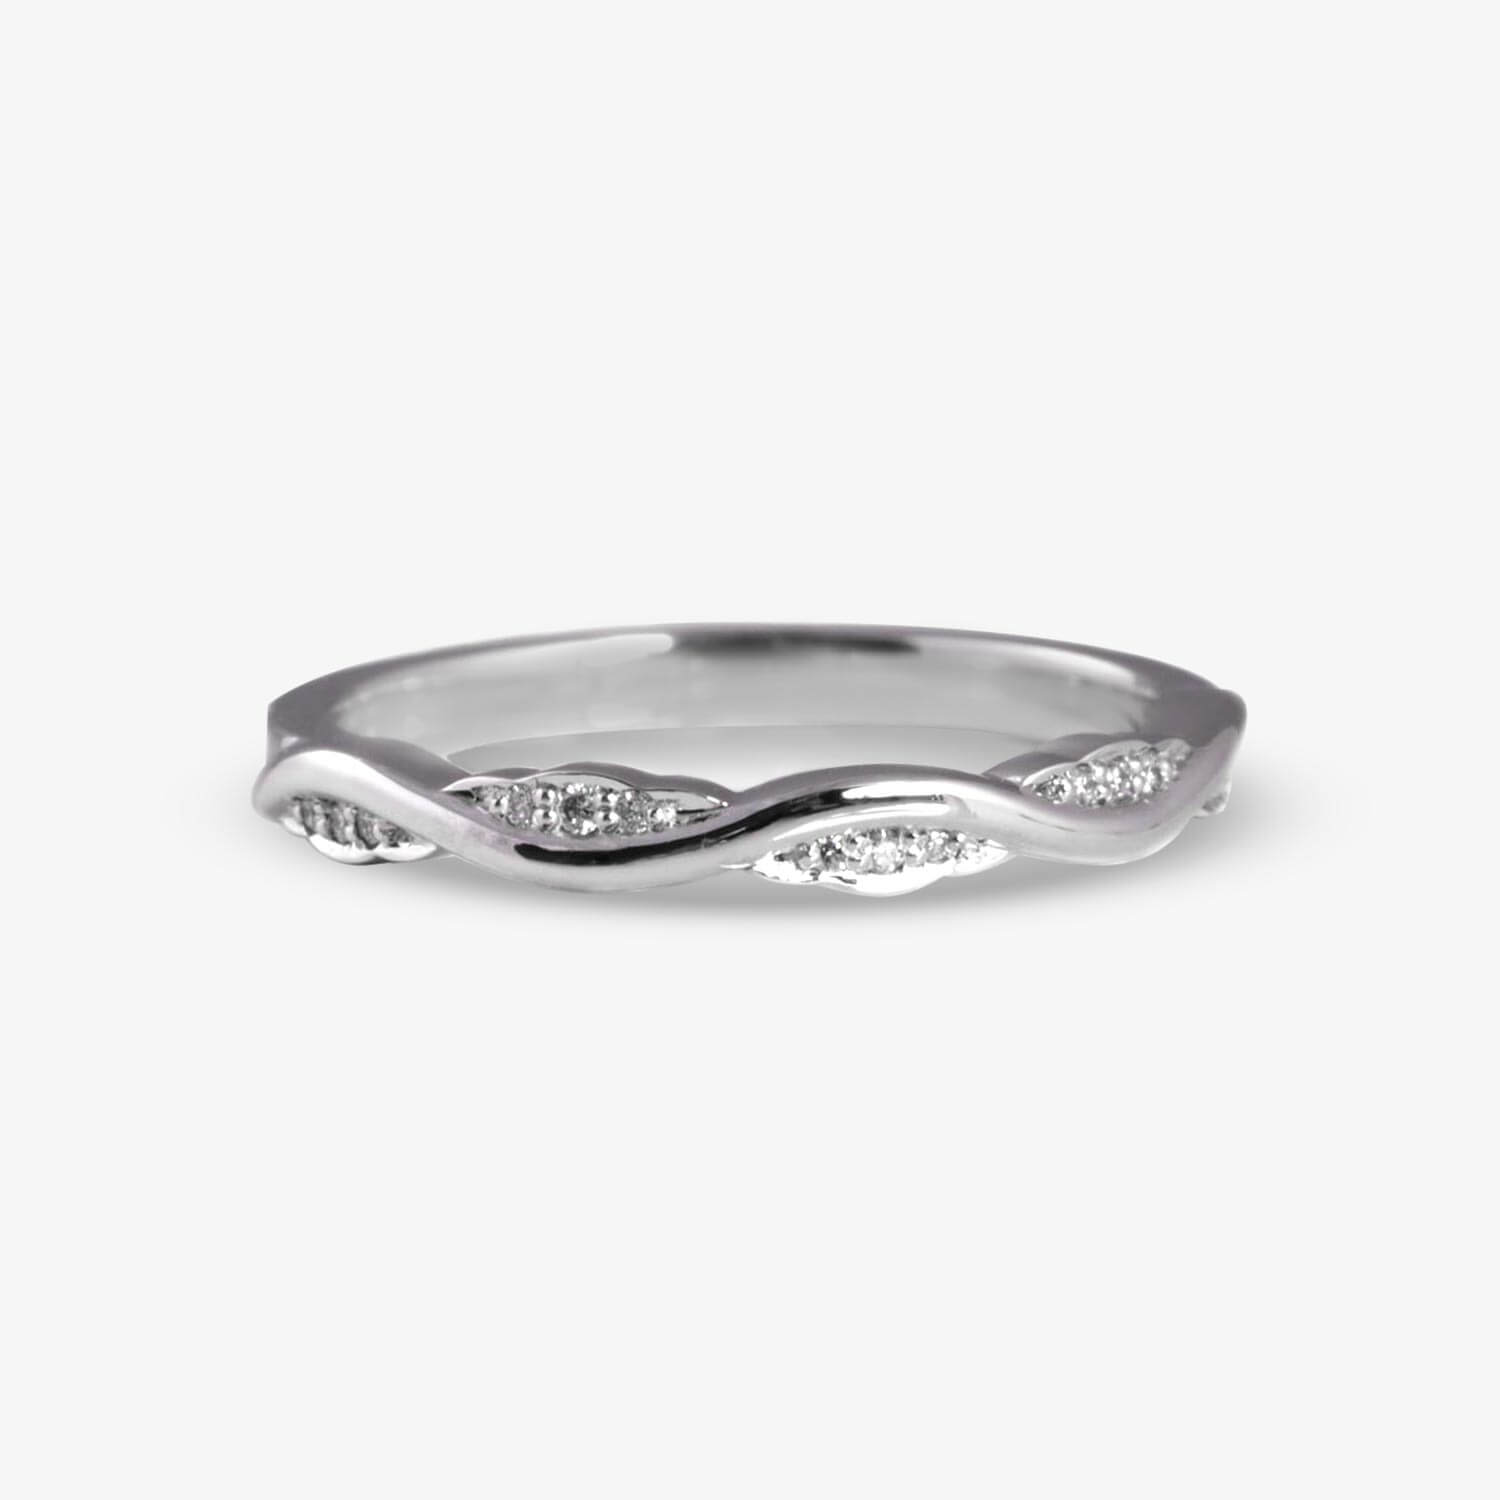 Bespoke Platinum and Diamond Wedding Ring